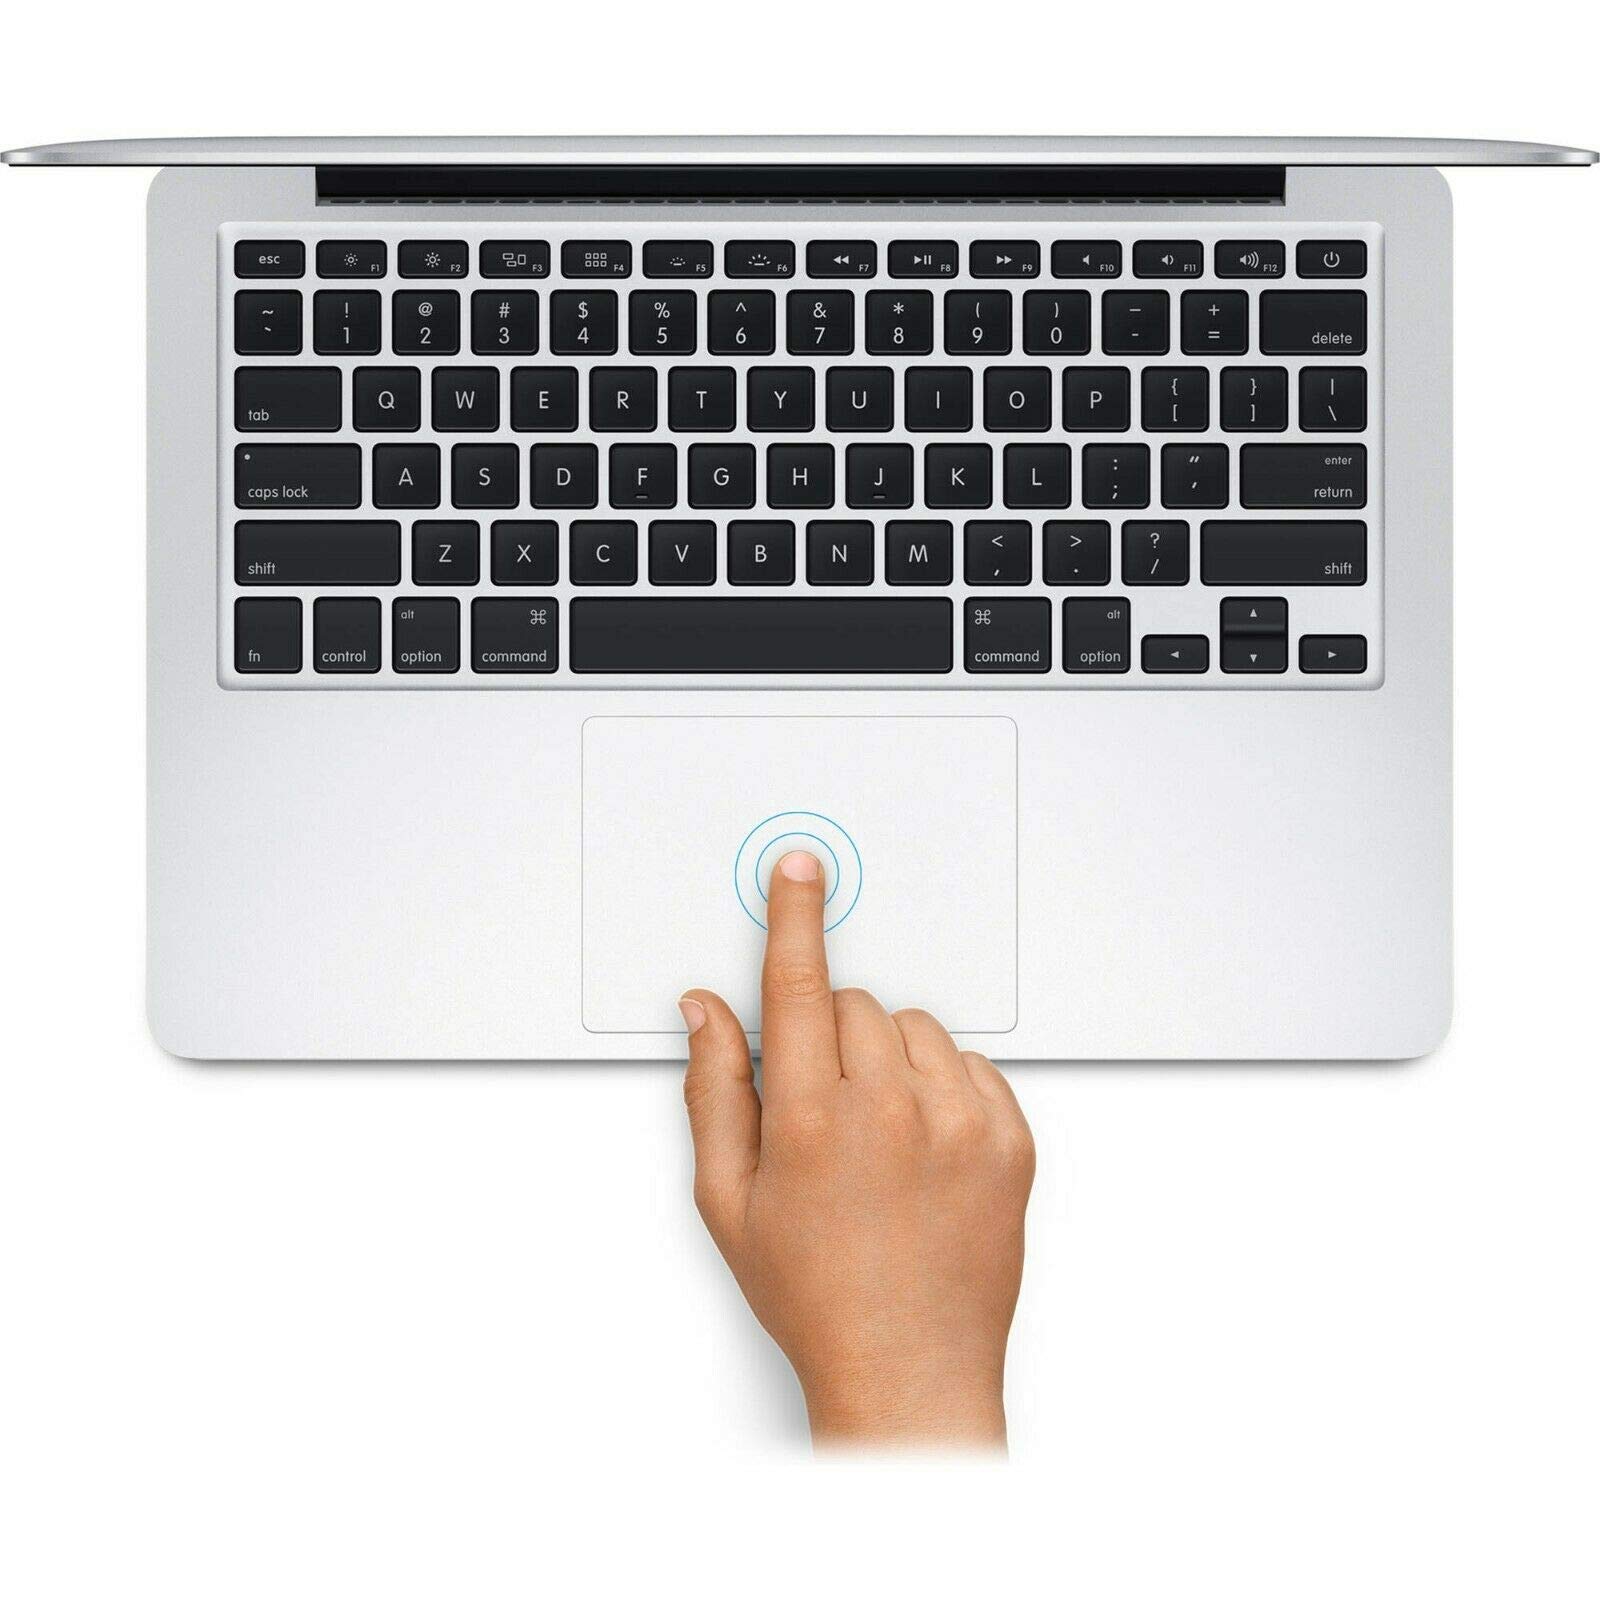 Mid 2015 Apple MacBook Pro with 2.5GHz Intel Core i7 (15.4 inch Retina Display, 4GB RAM, 500GB HDD) Silver (Renewed)